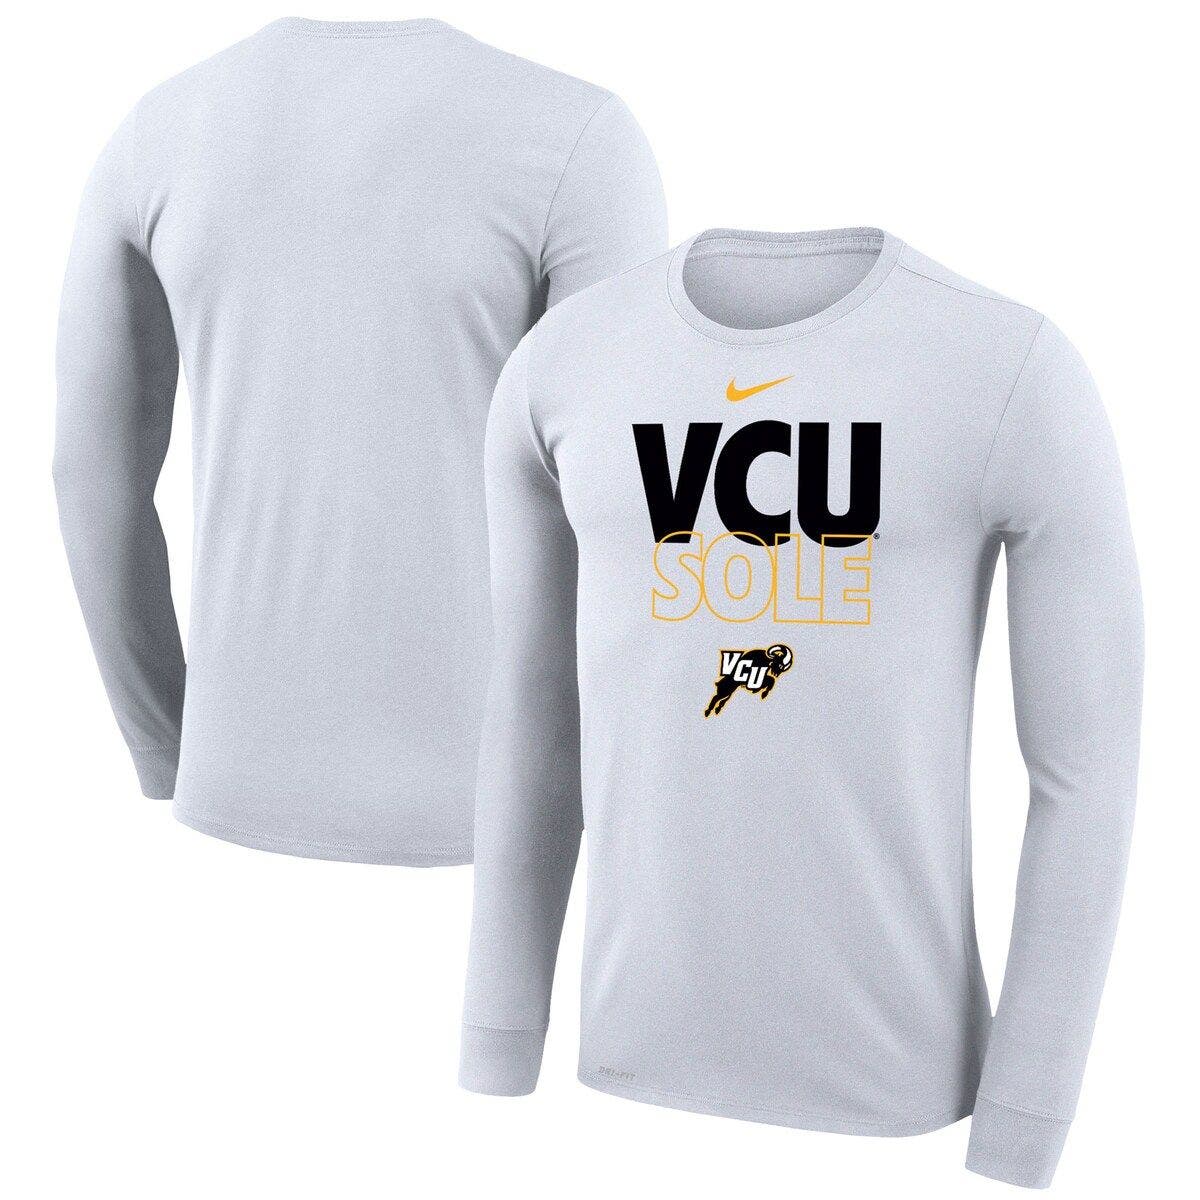 VCU Rams soccer gear